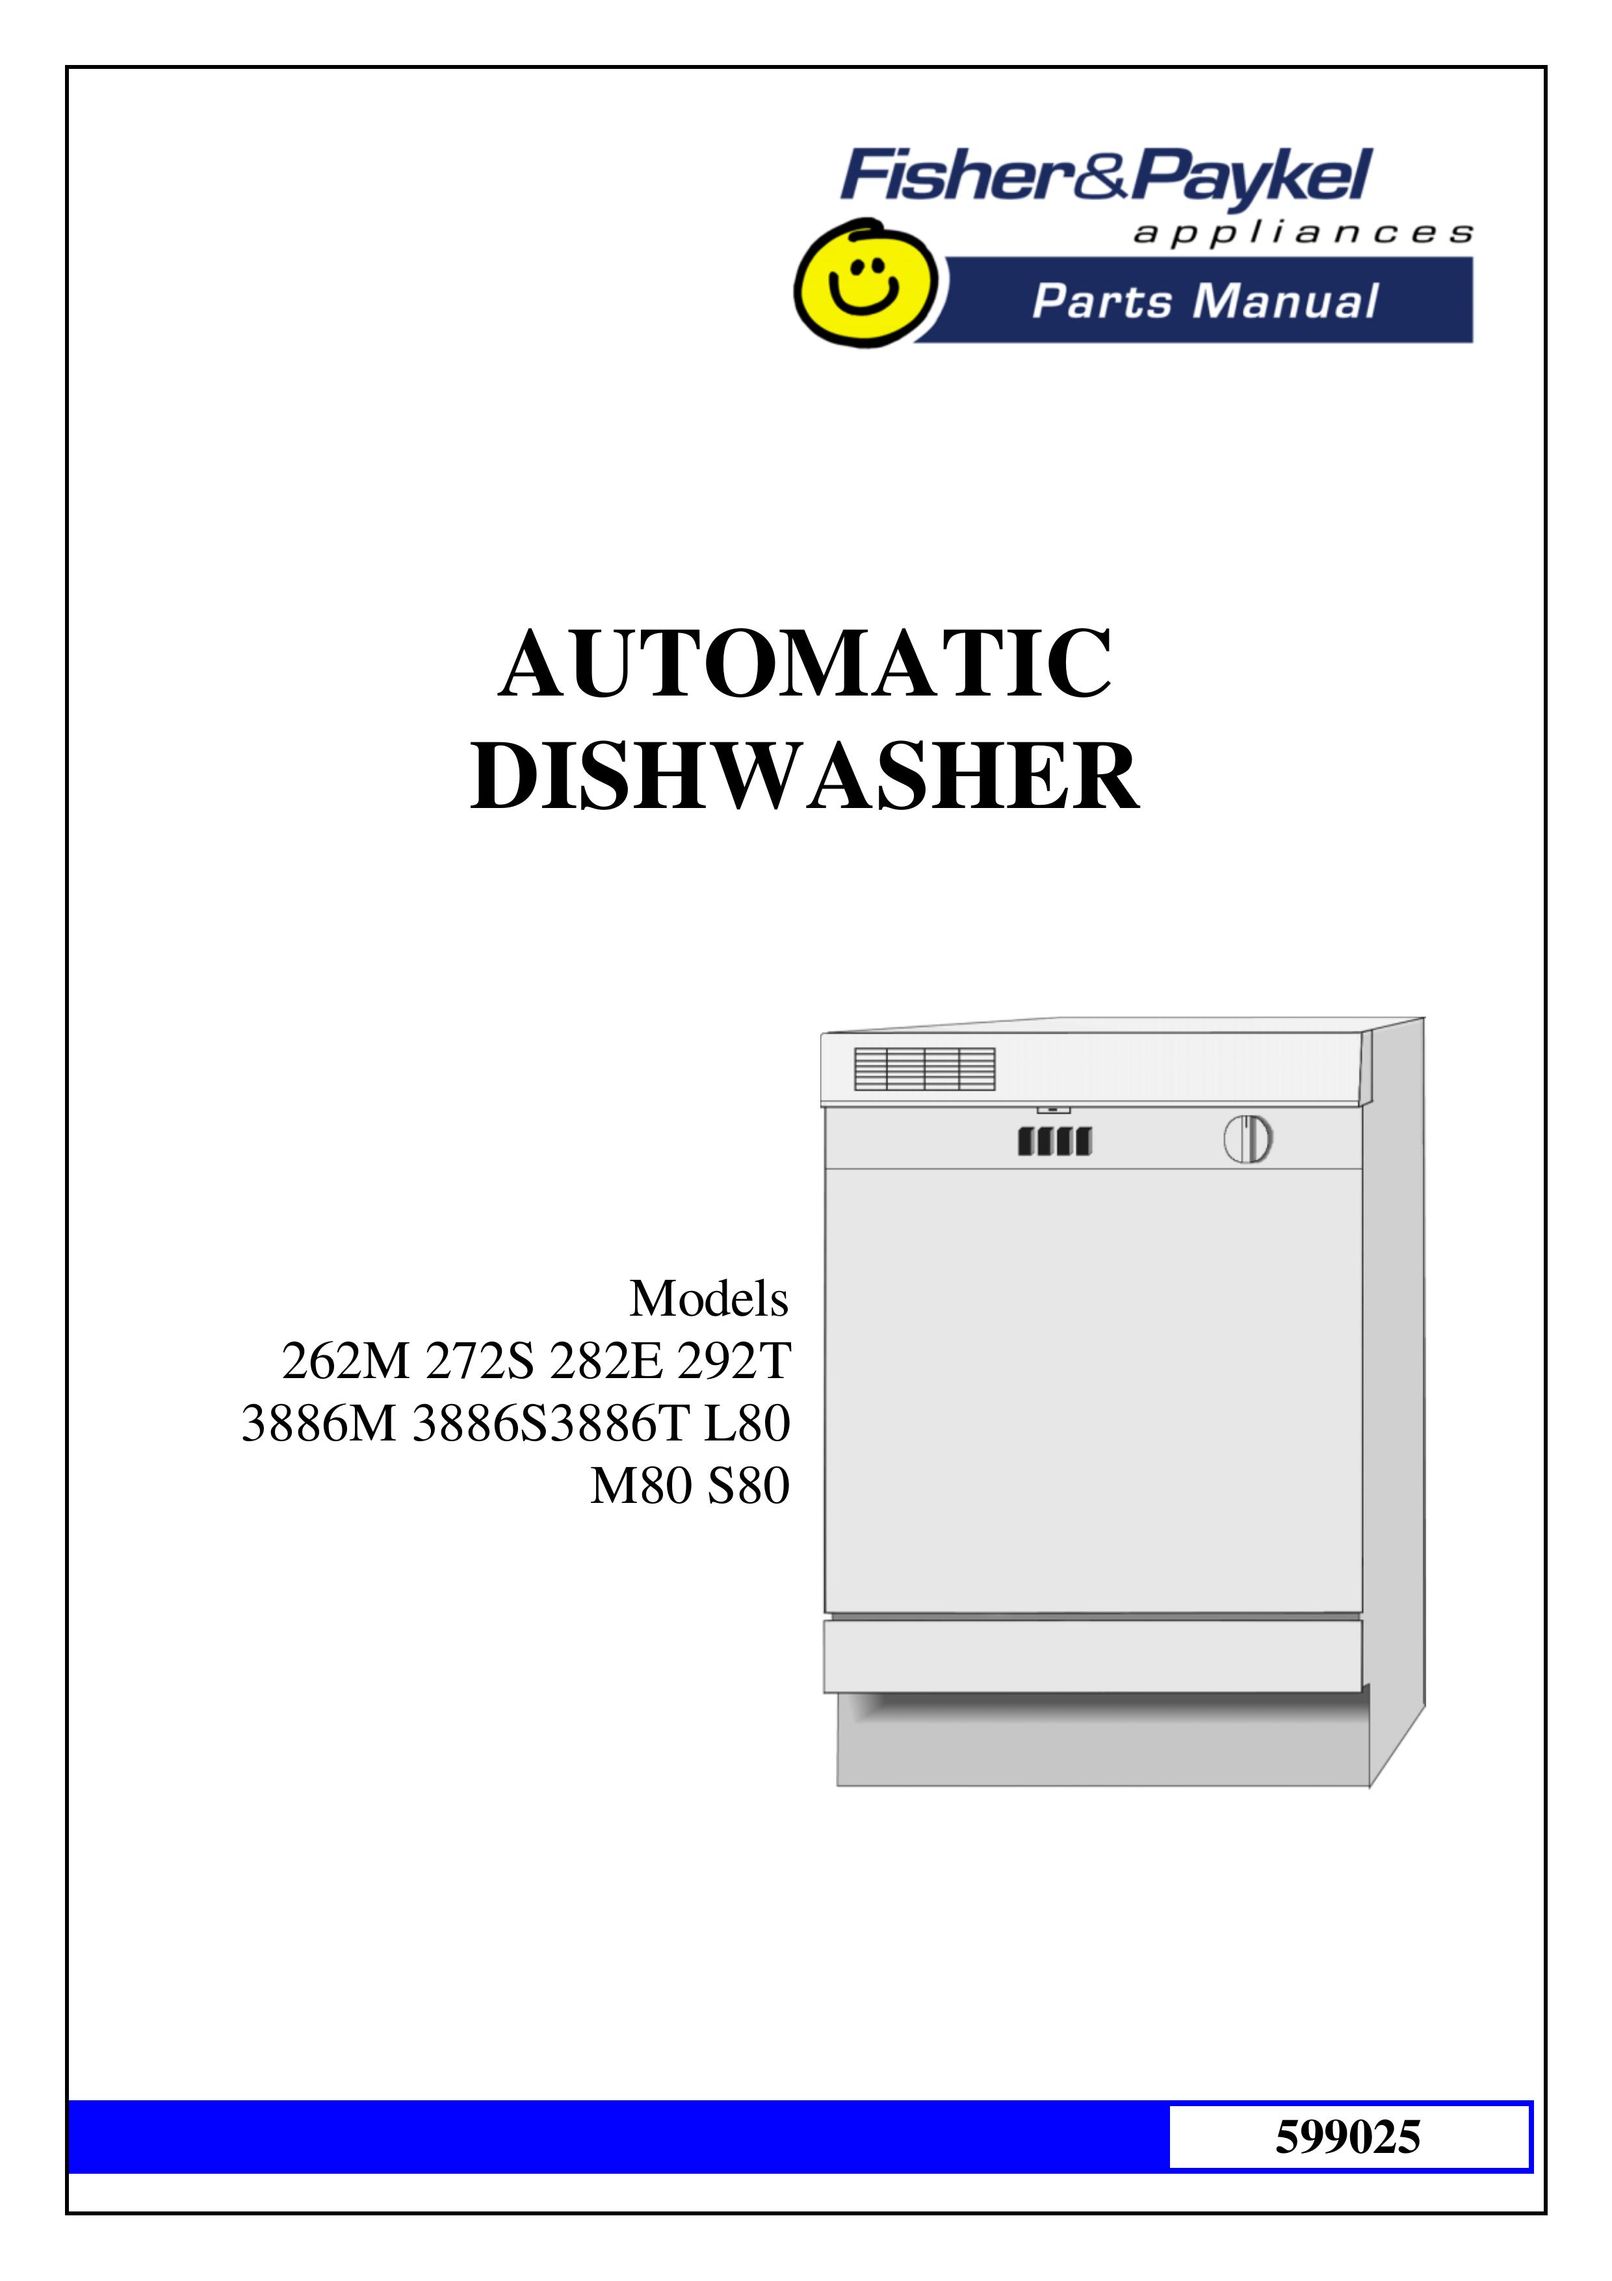 Frigidaire 292T Dishwasher User Manual